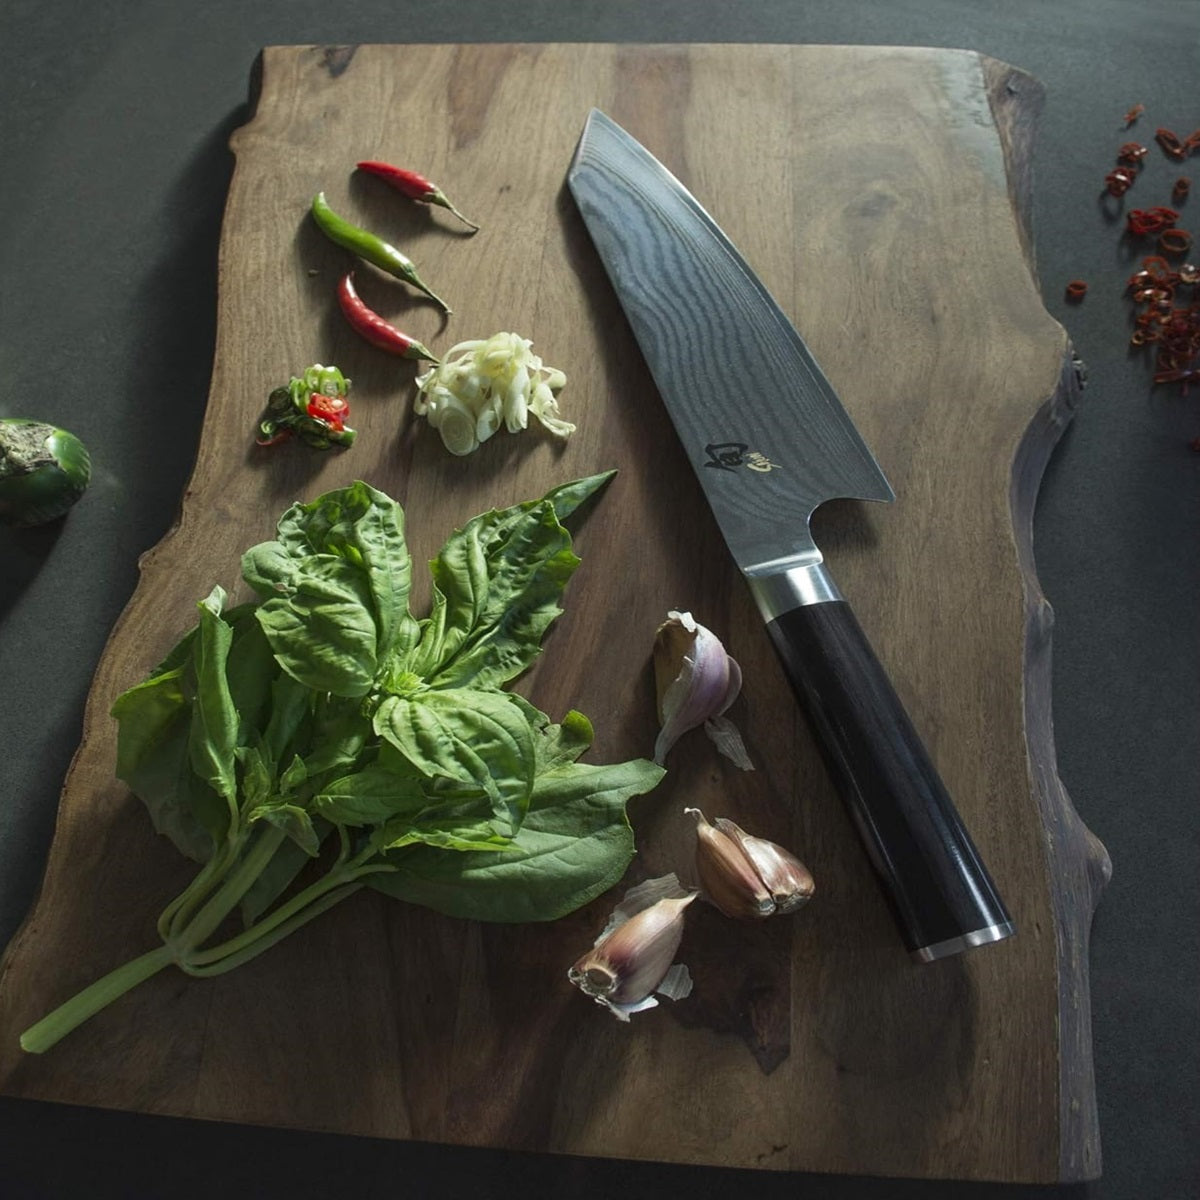 KAI Shun Classic Kiritsuke 8" Chef Knife D-shaped with Pakkawood Handles [Model DM0771]